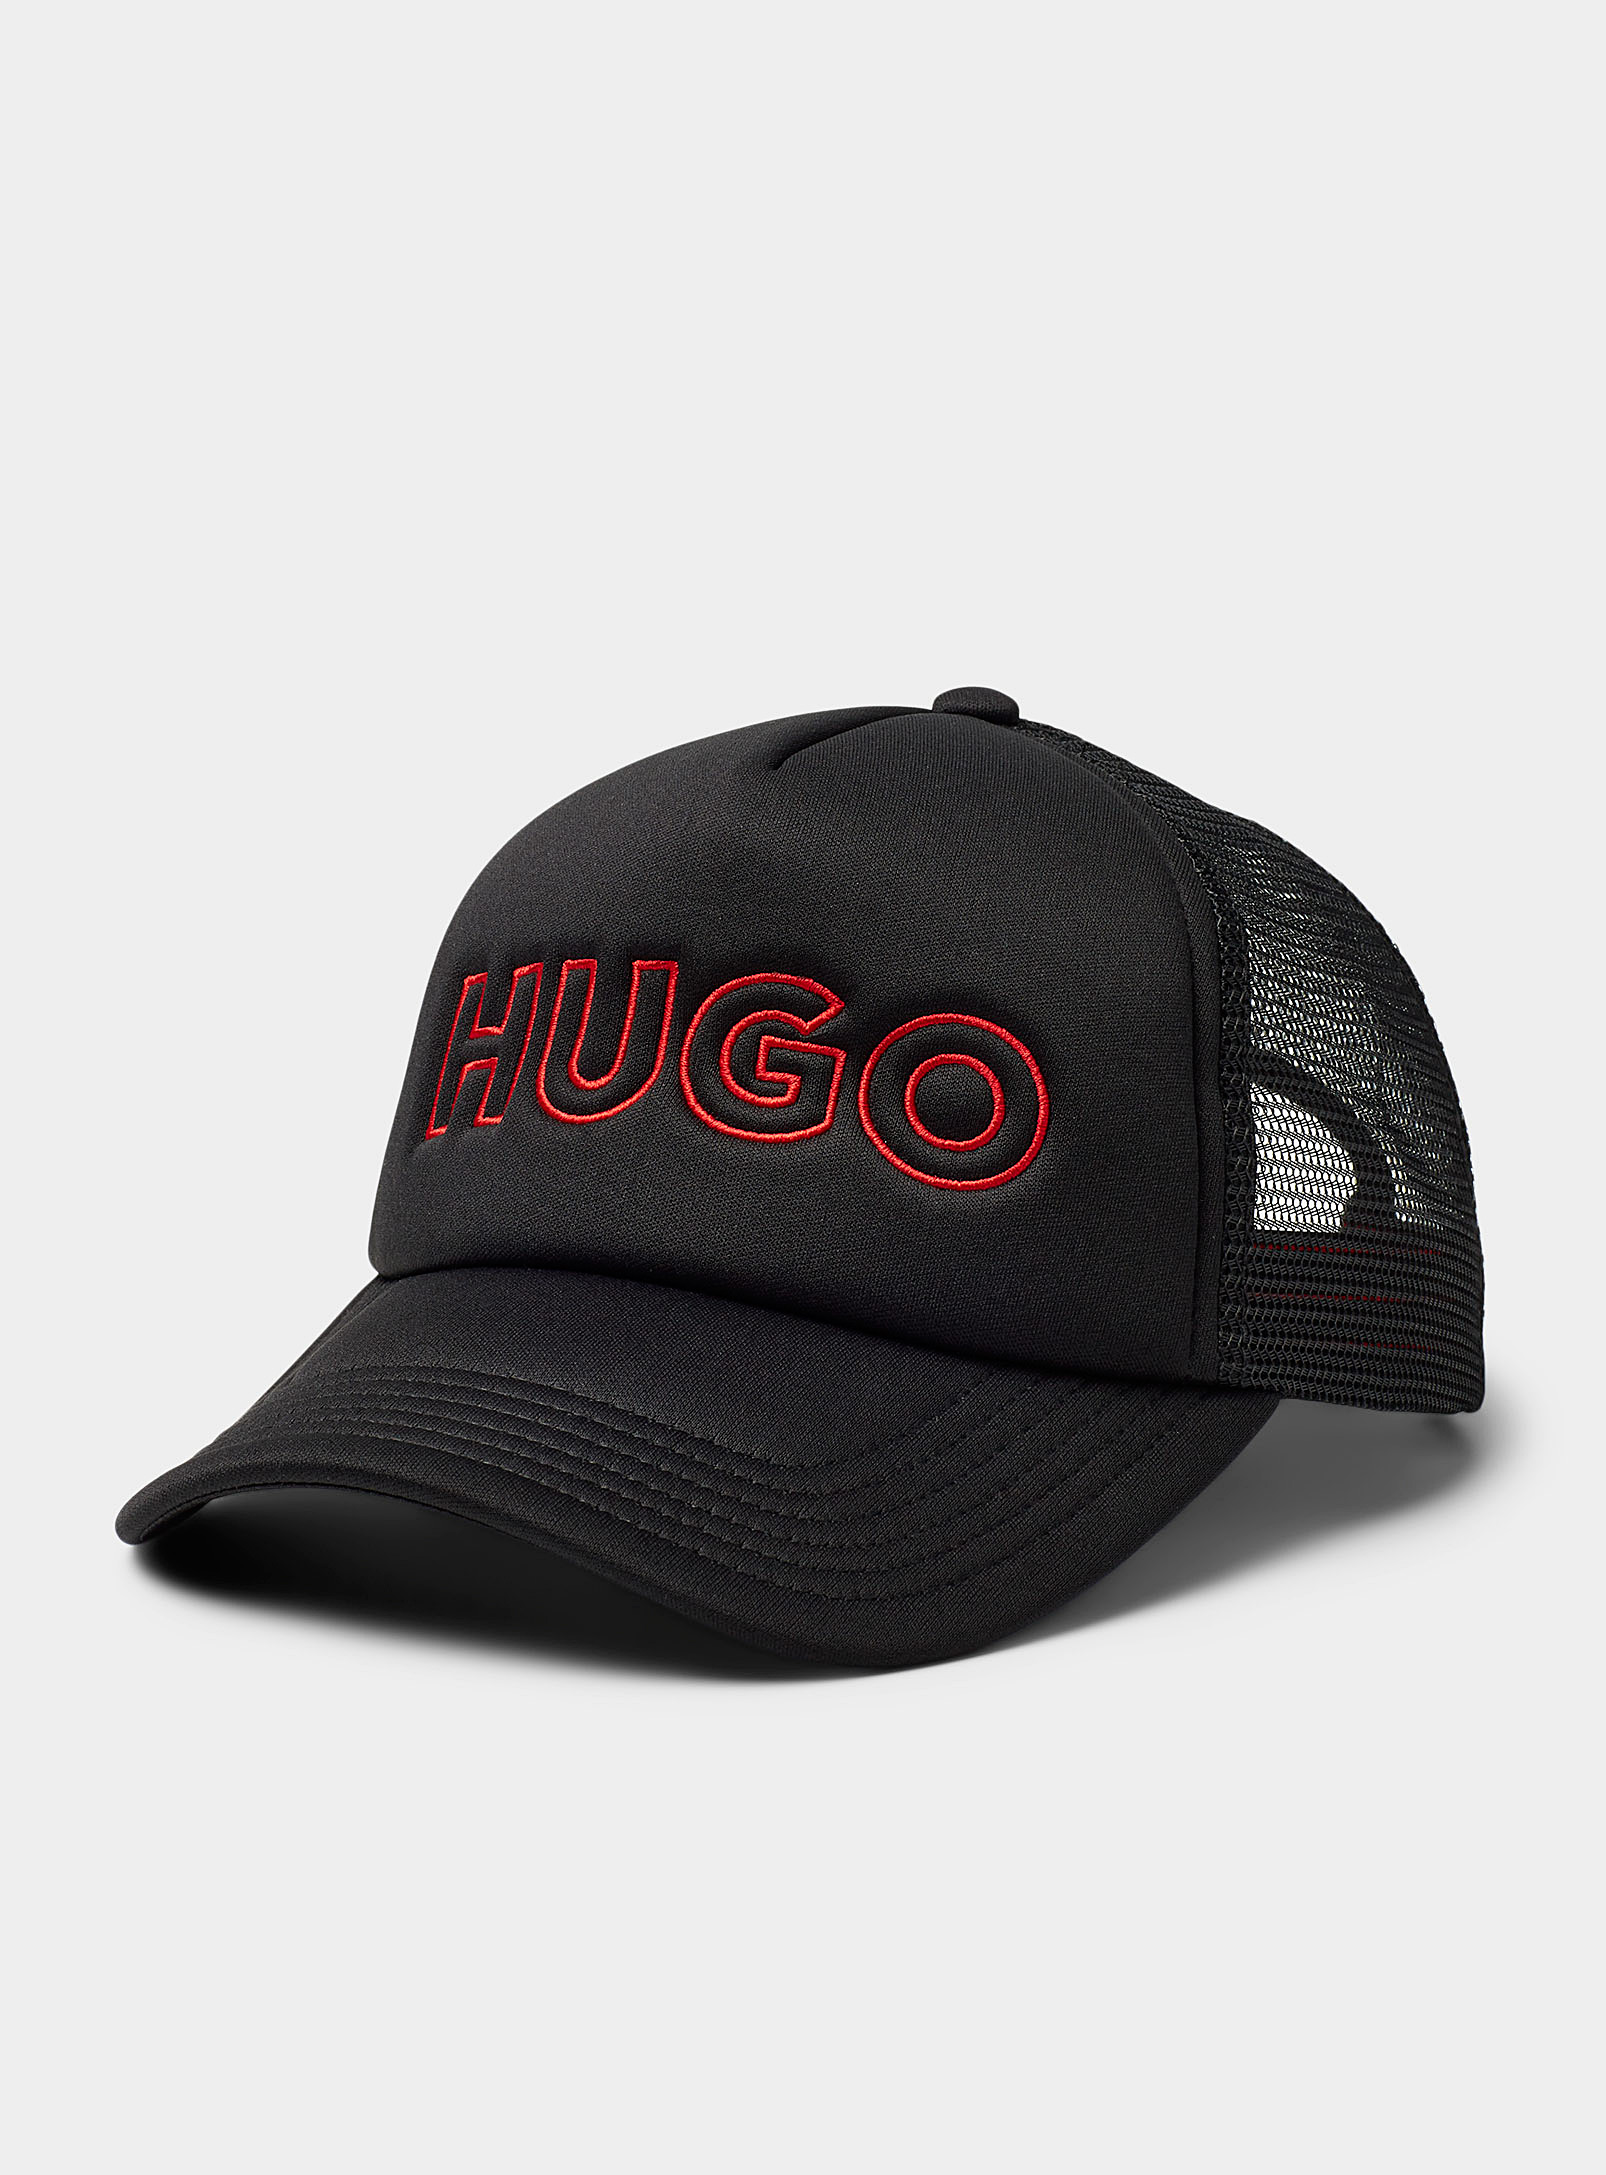 HUGO - Men's Red letters trucker cap